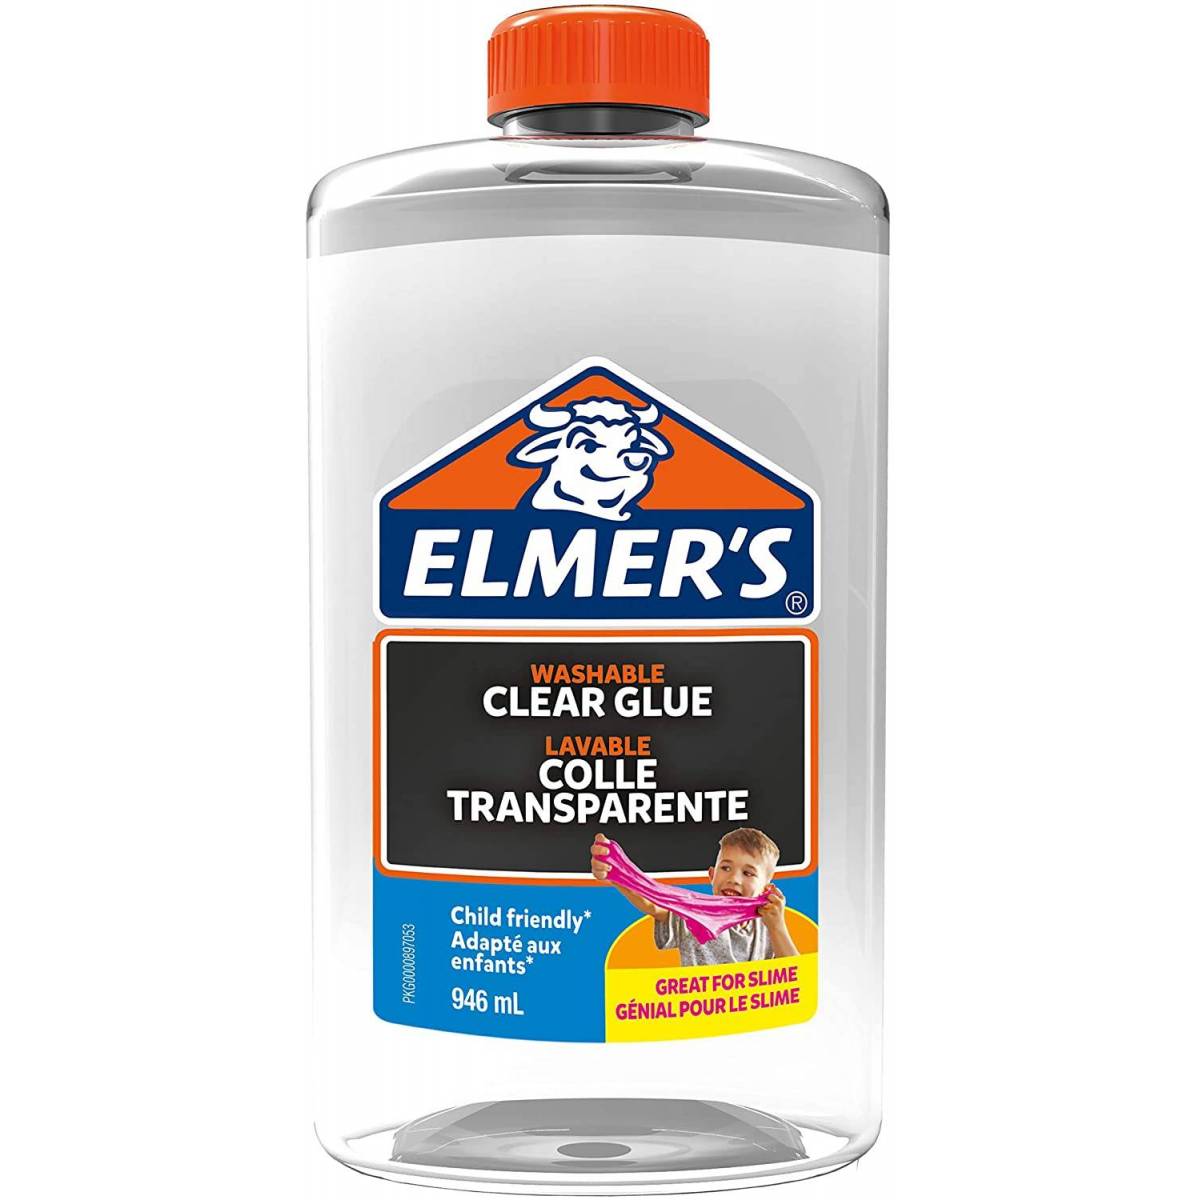 span translate=no>Elmer's</span> Transparent Liquid Glue for Slime 946 ml